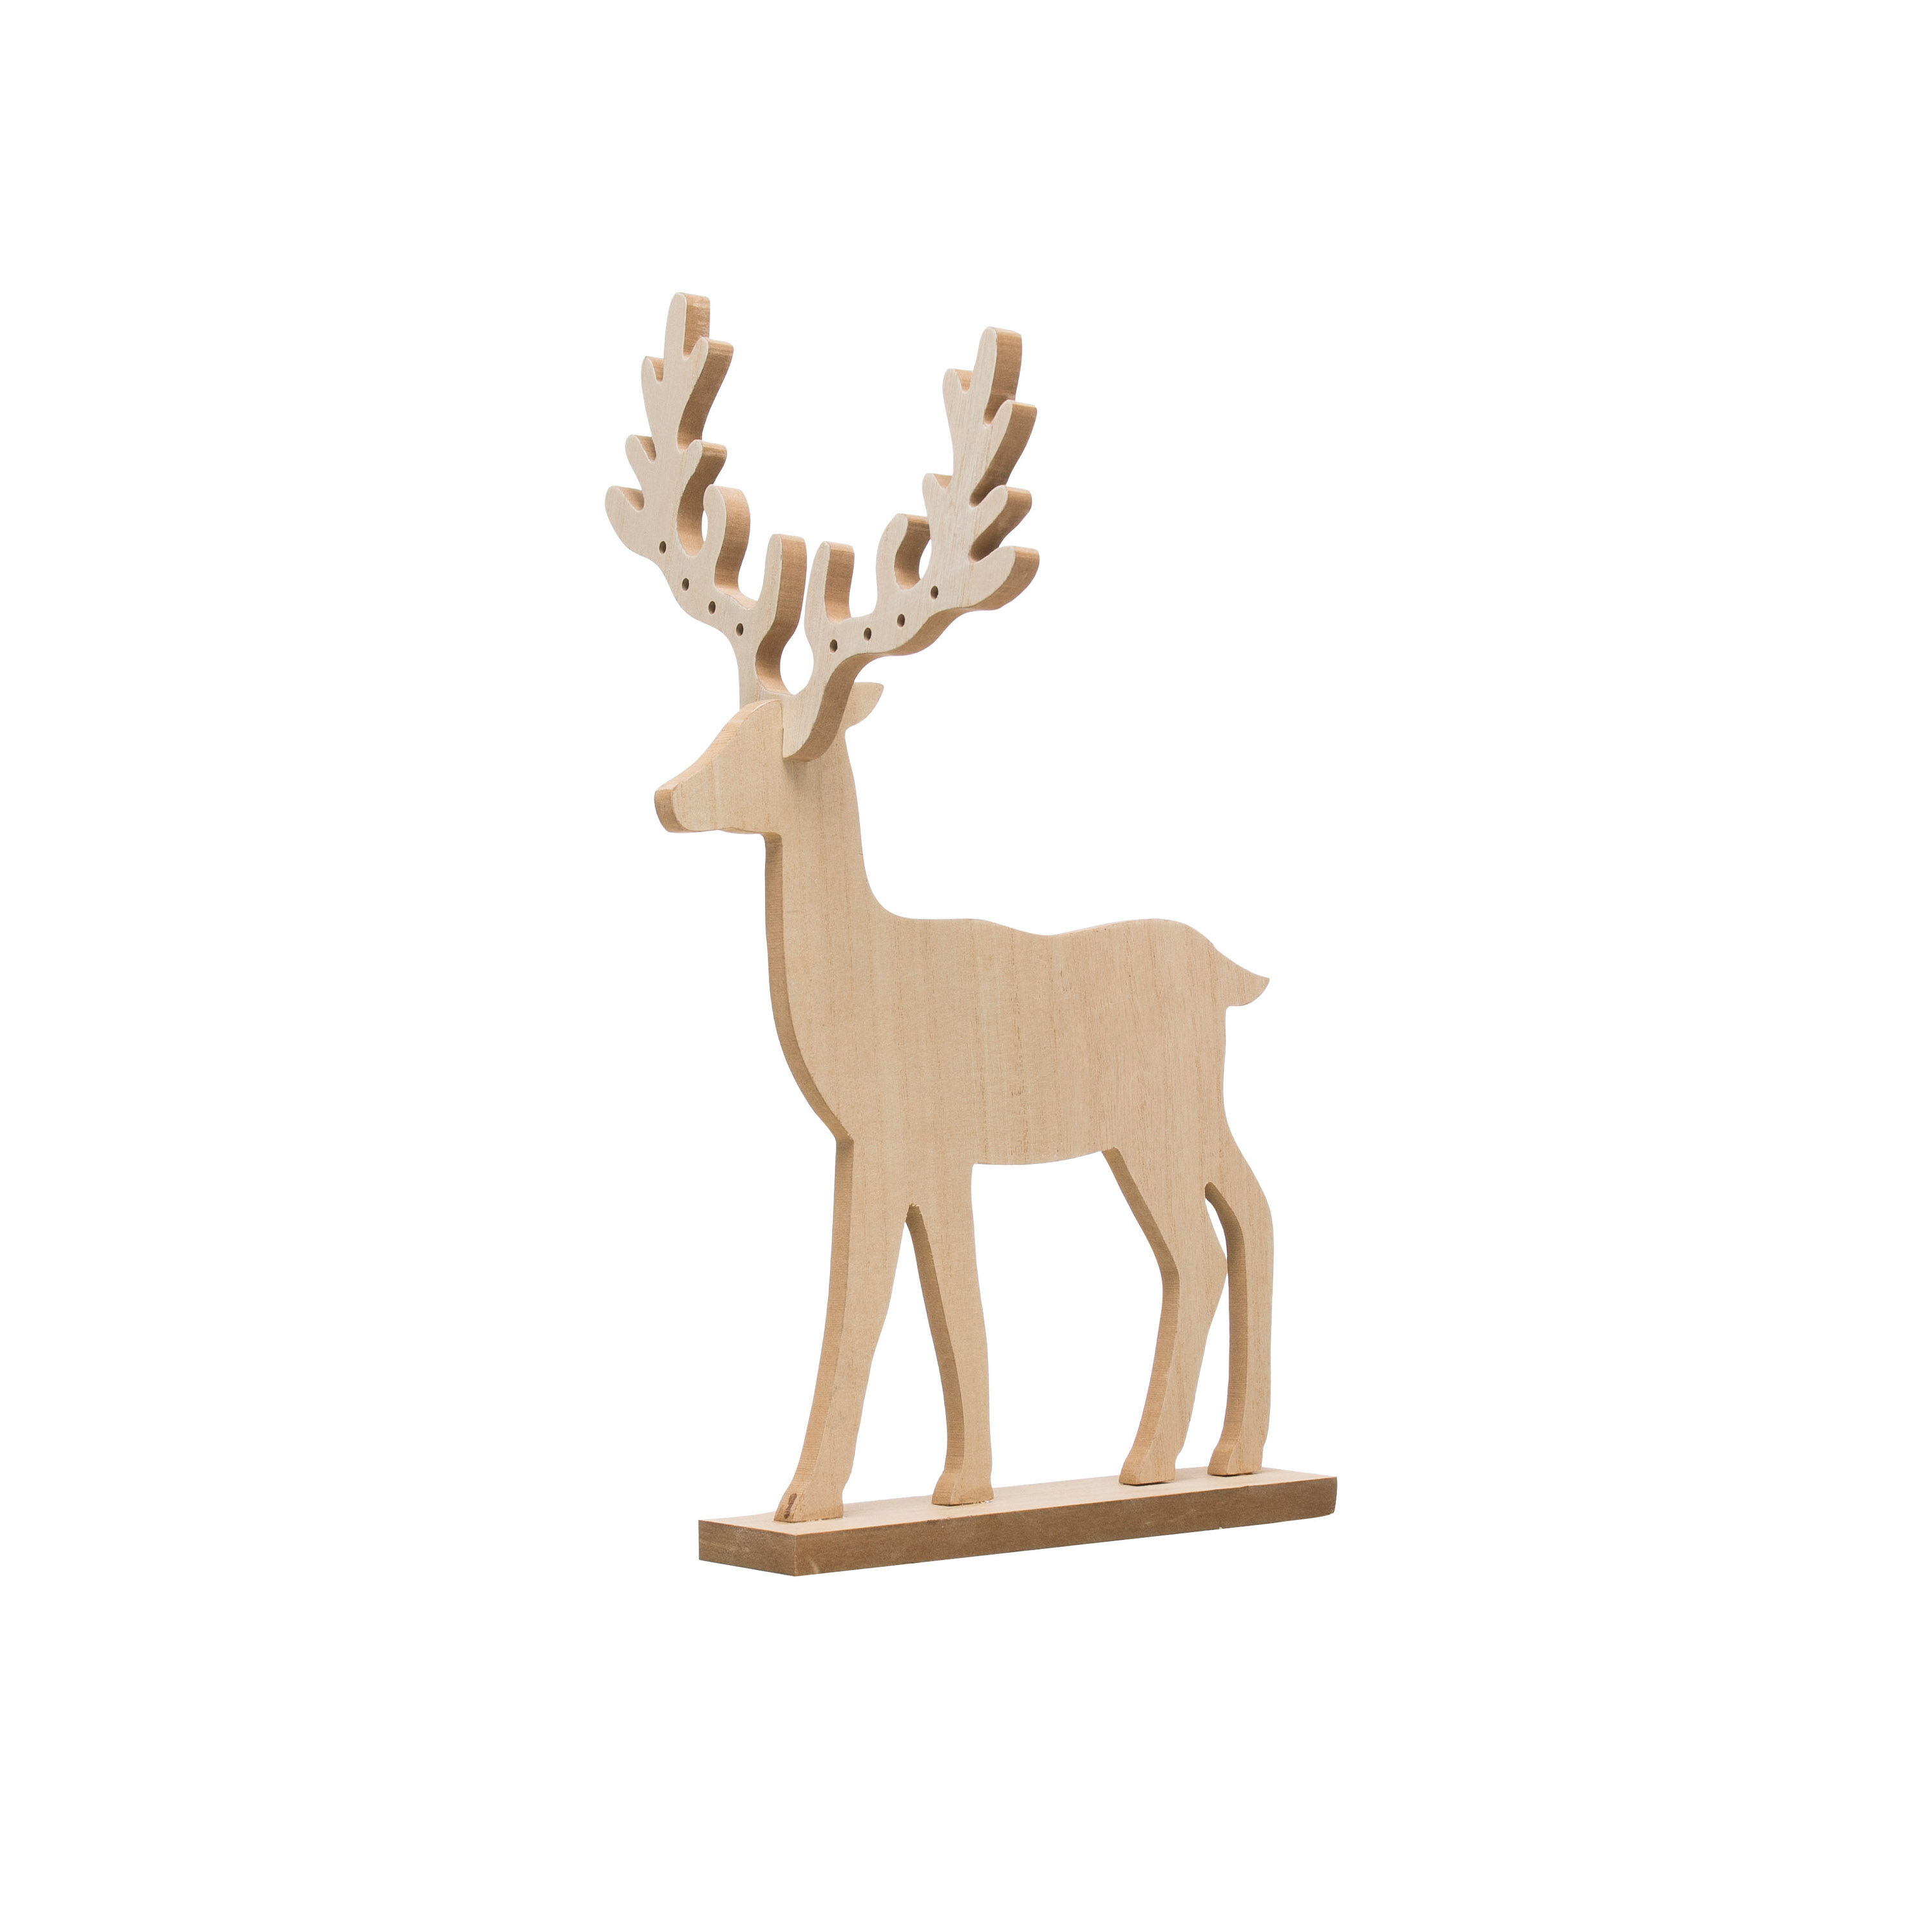 Details about   Deer 2018 Christmas Ornament 